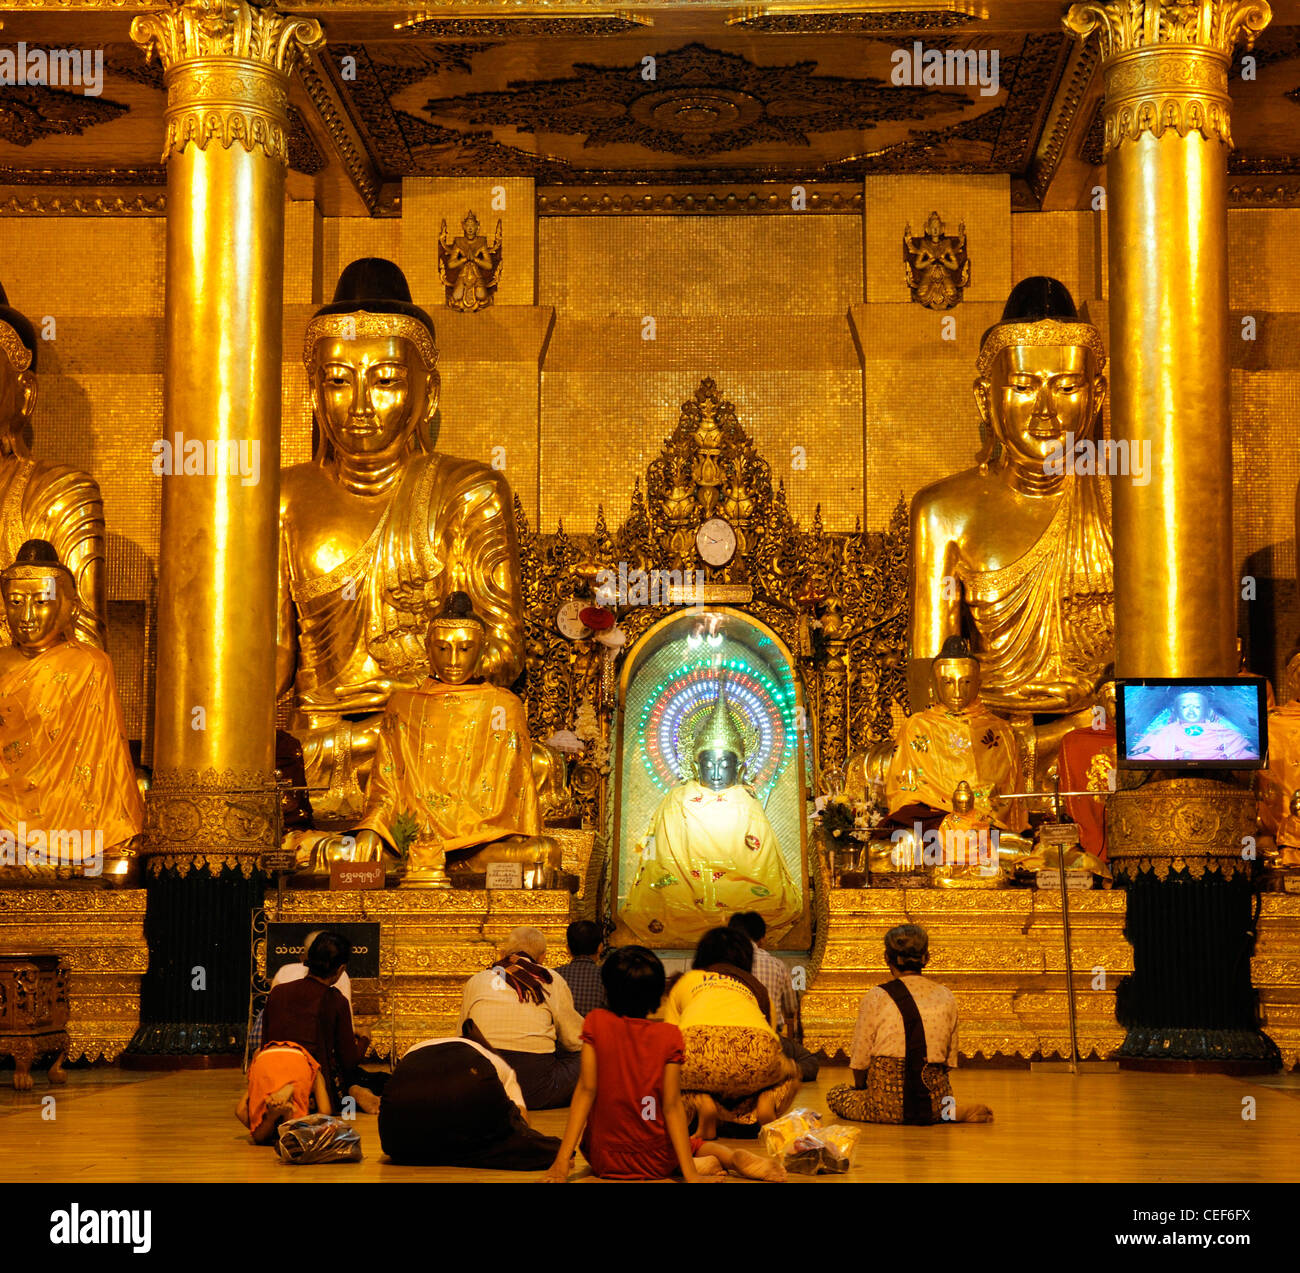 statue-buddha-buddhism-buddhist-shrine-gold-golden-illuminate-worship-CEF6FX.jpg